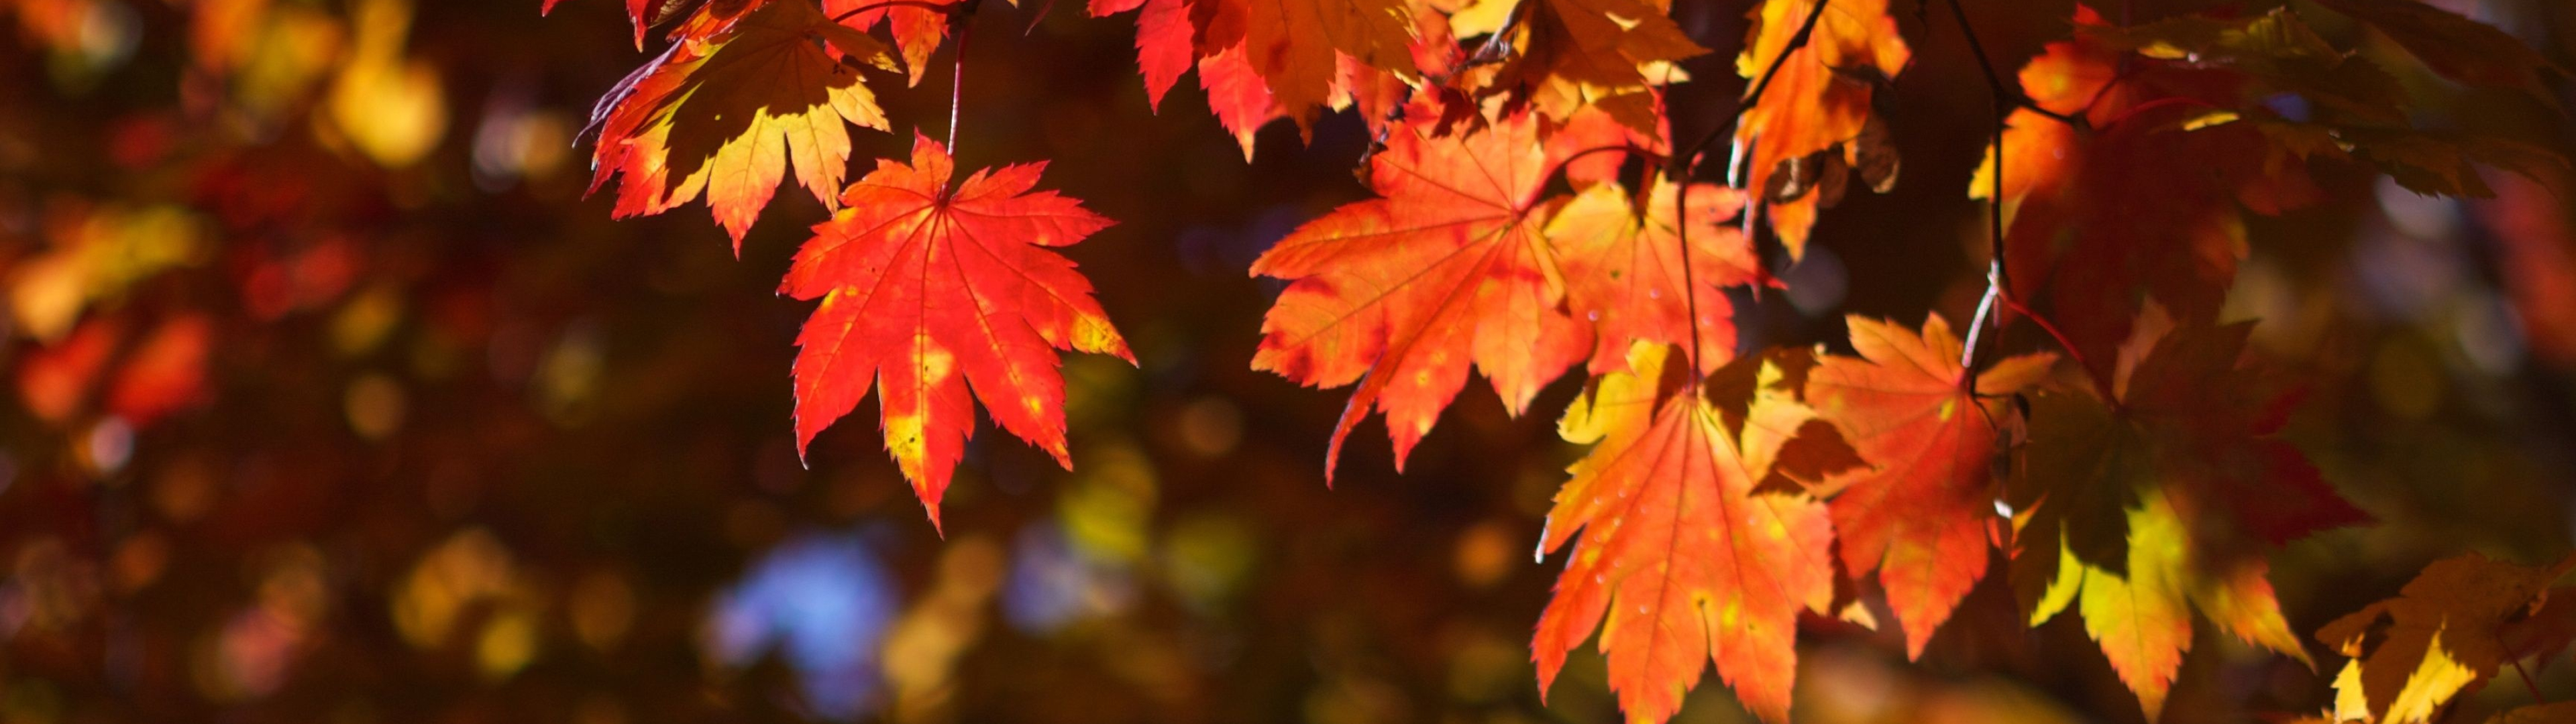 3840 x 1080, Autumn wallpapers, Breathtaking landscapes, Stunning backgrounds, 3840x1080 Dual Screen Desktop